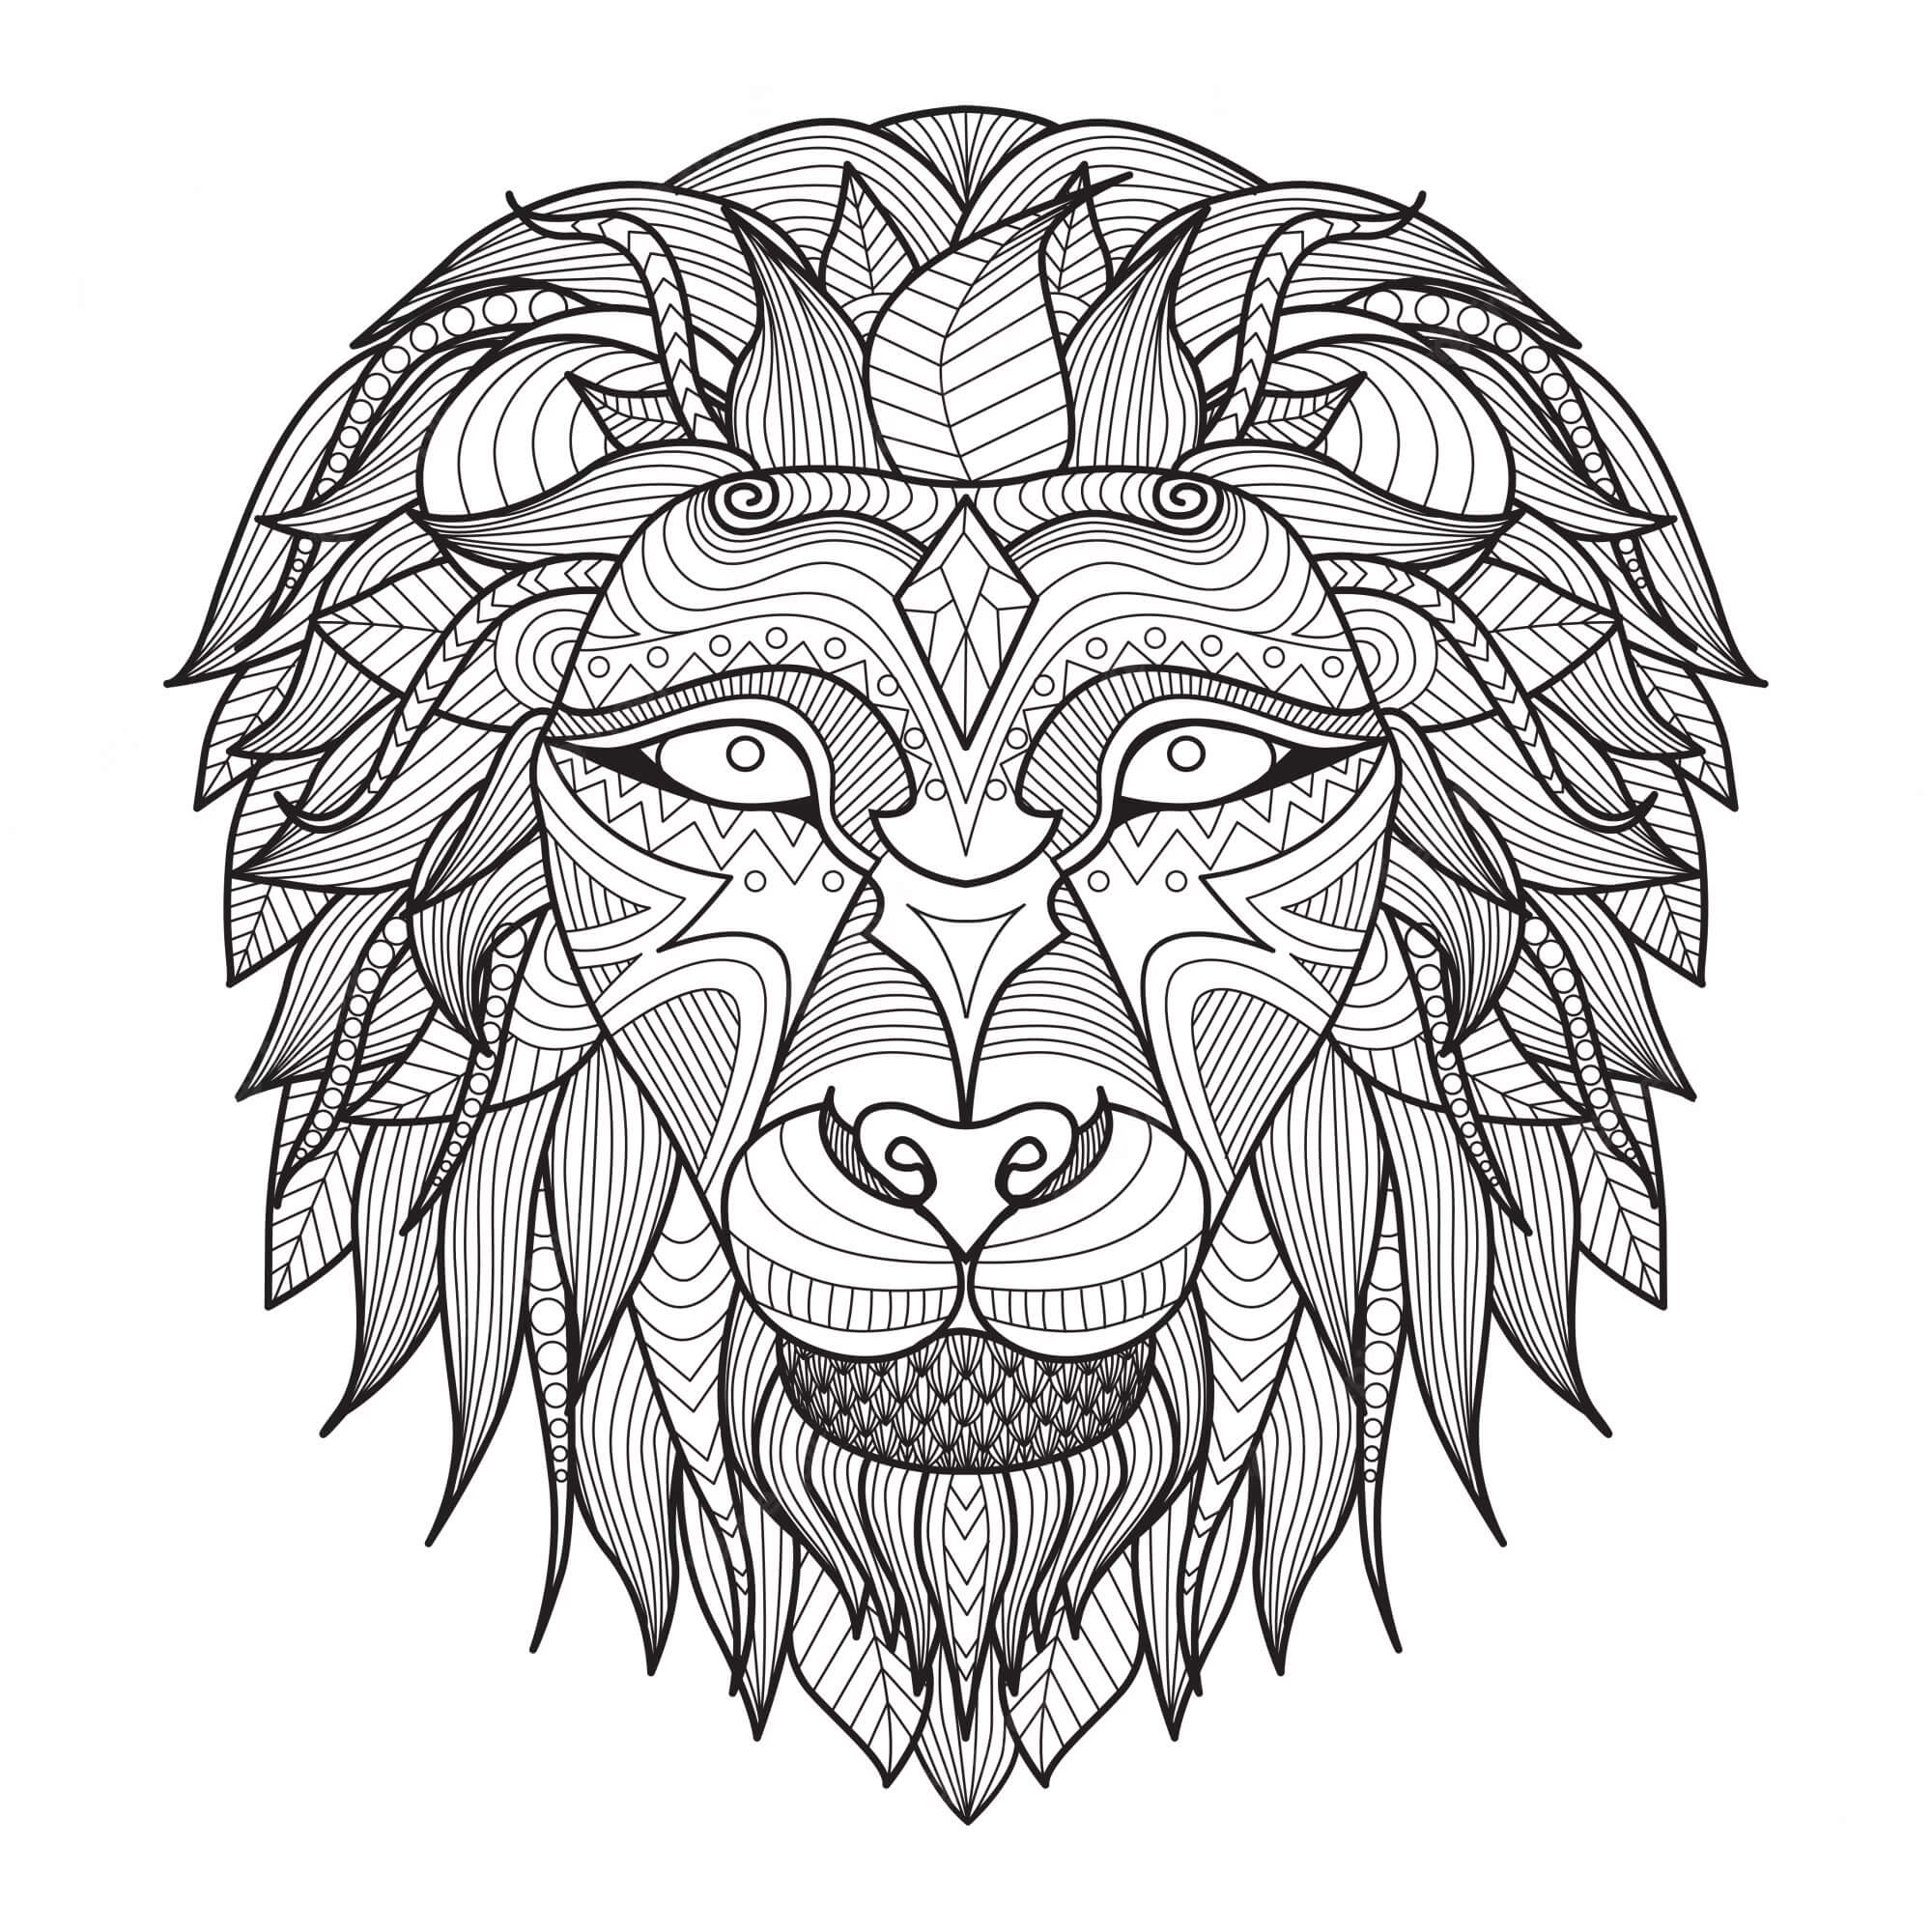 Mandala Lion Coloring Page - Sheet 9 Mandalas